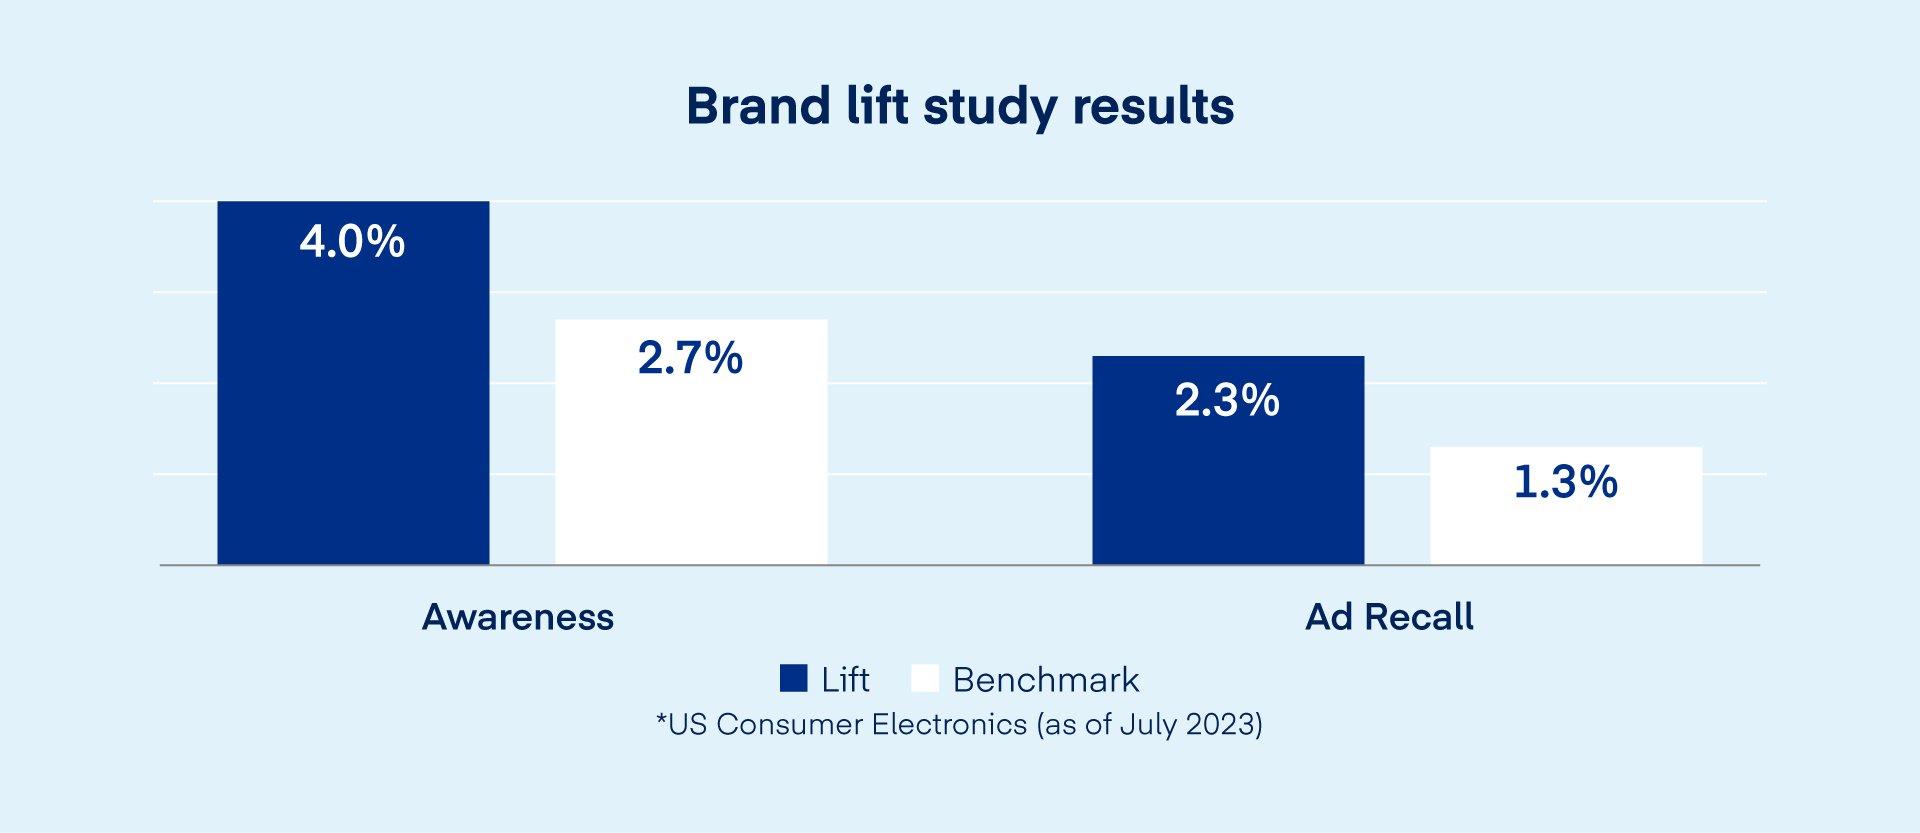 Brand lift study results